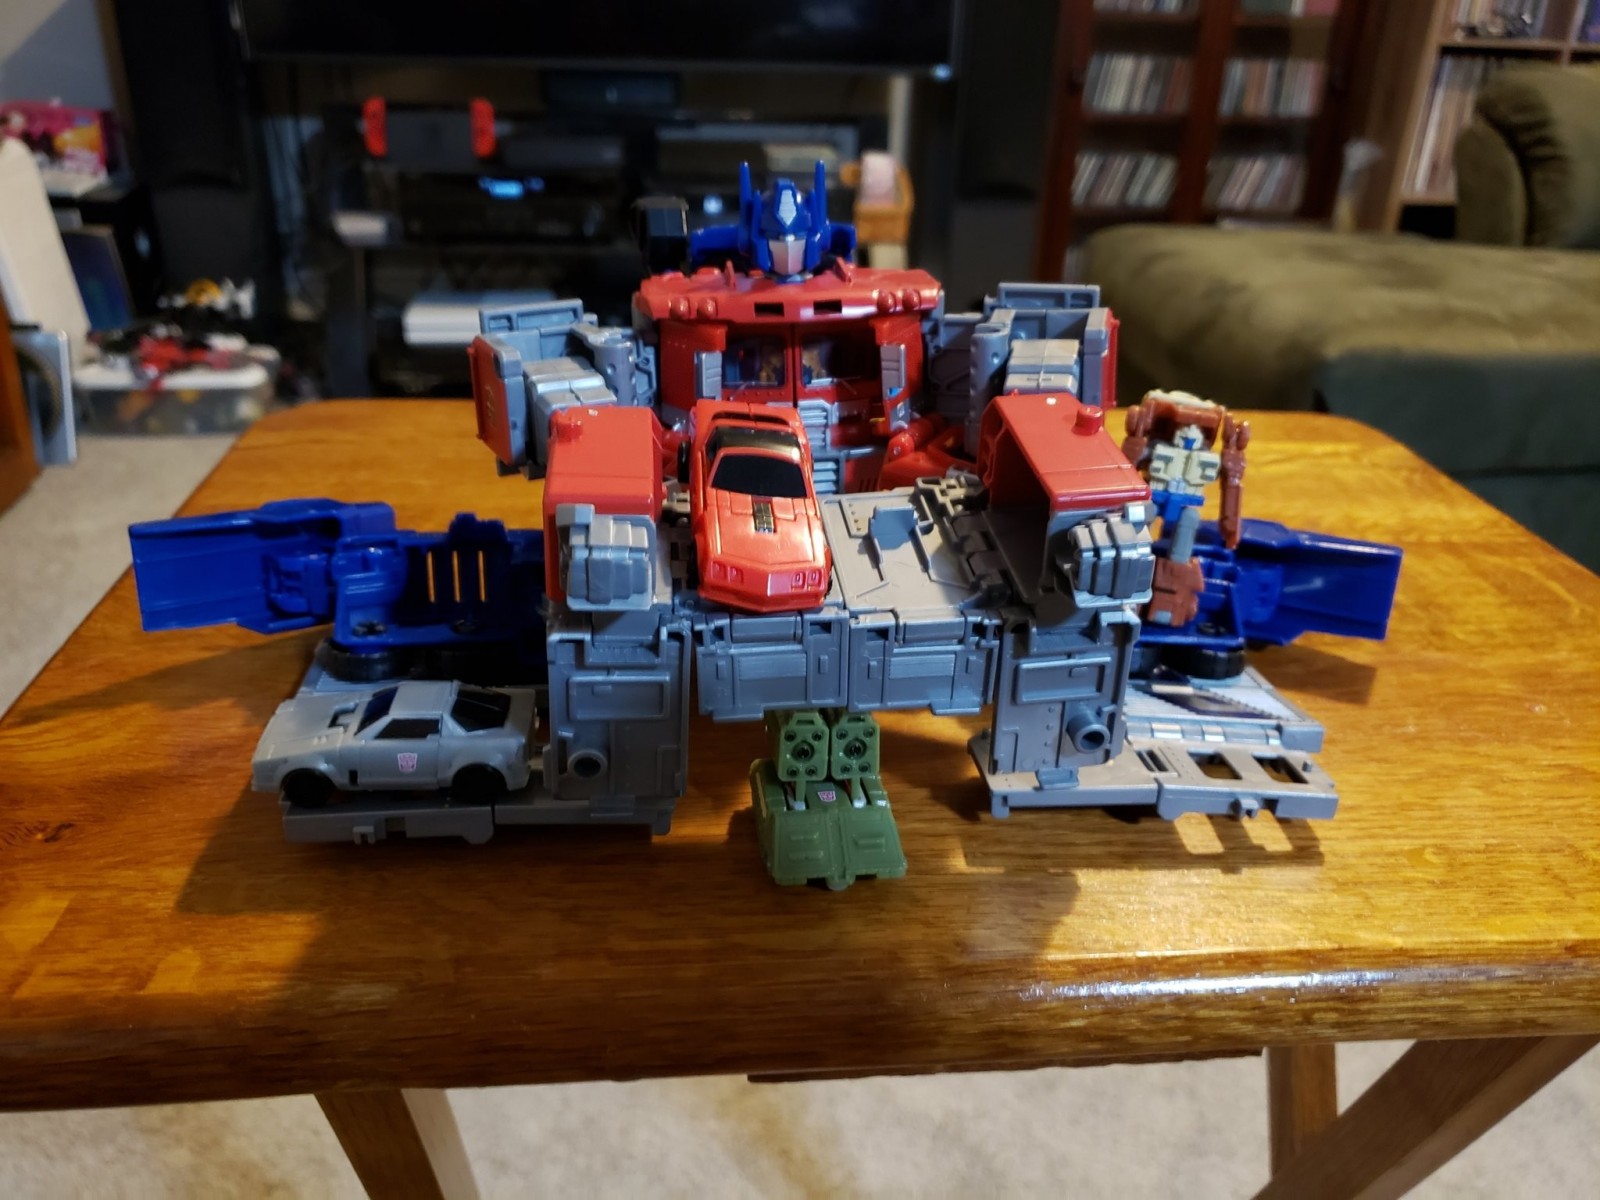 takara tomy transformers generations select star convoy